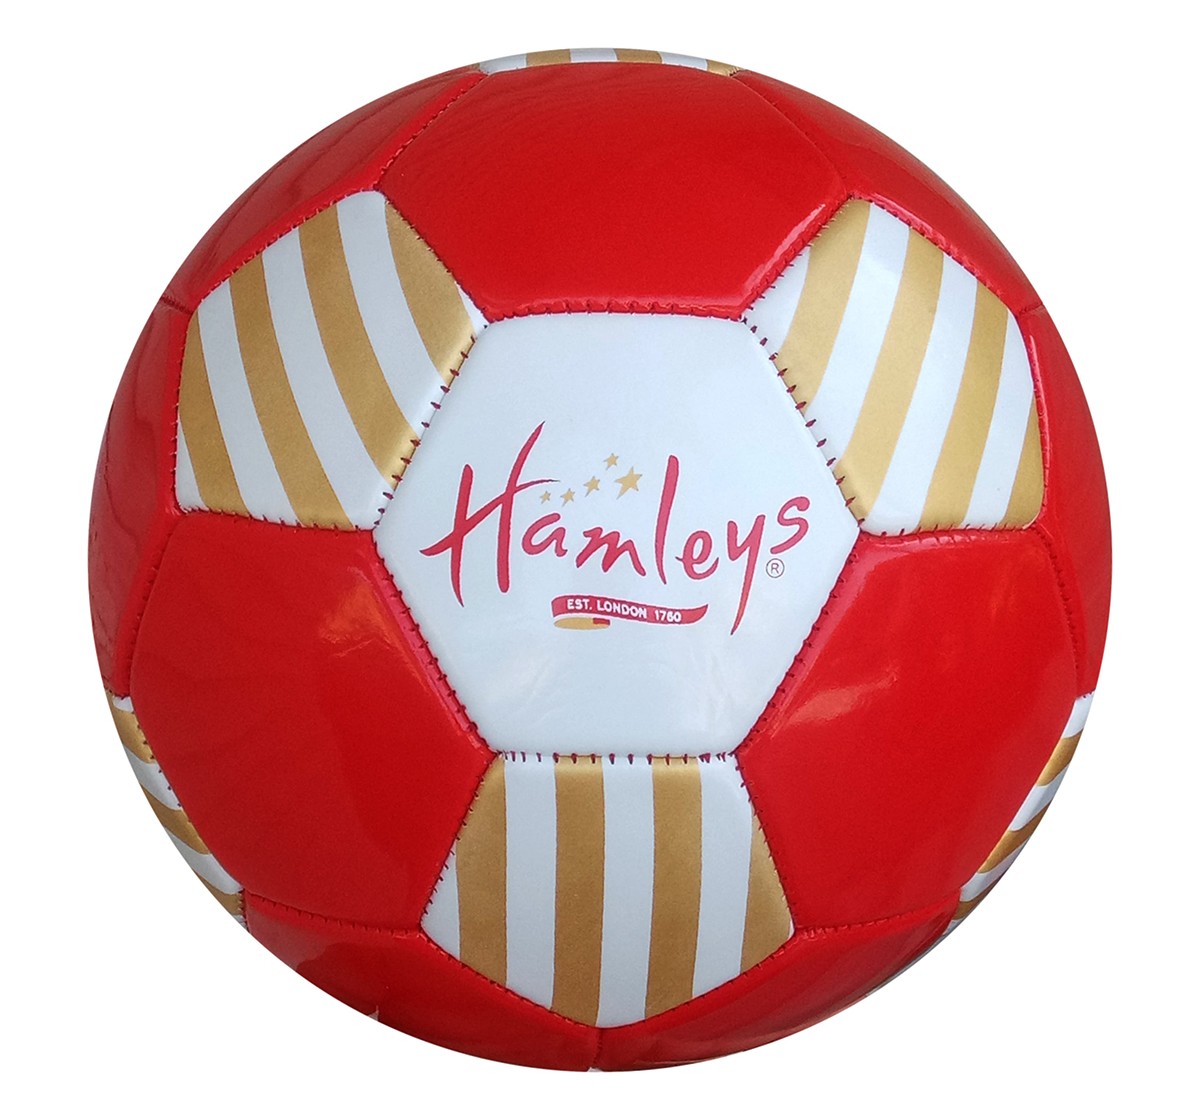 Hamleys Star Cross PVC Football for Kids age 5Y+ 